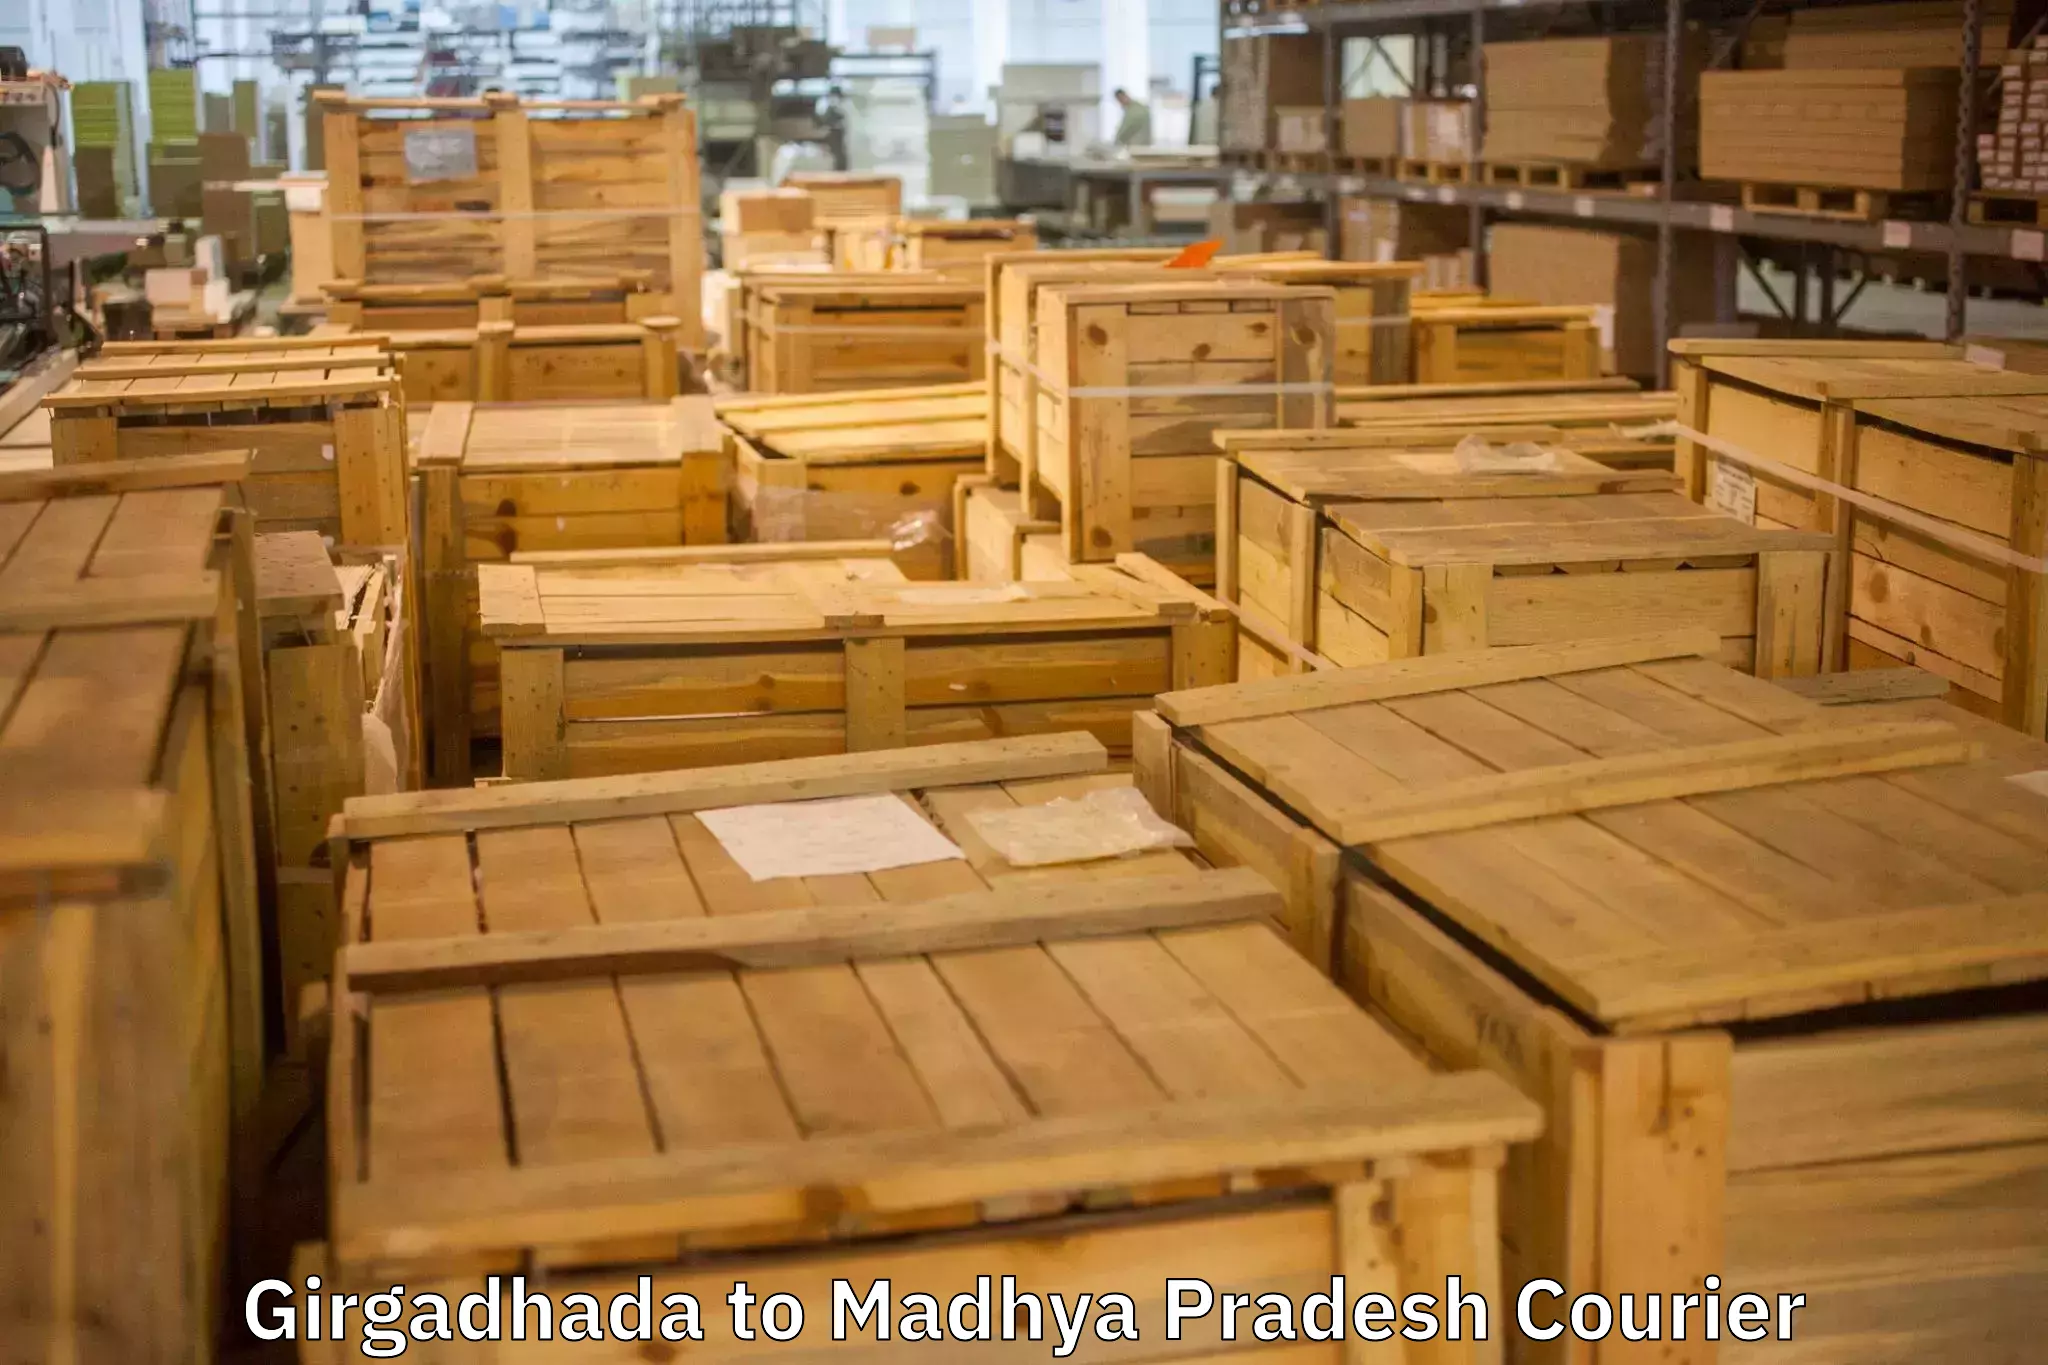 Efficient moving company in Girgadhada to Tarana Ujjain